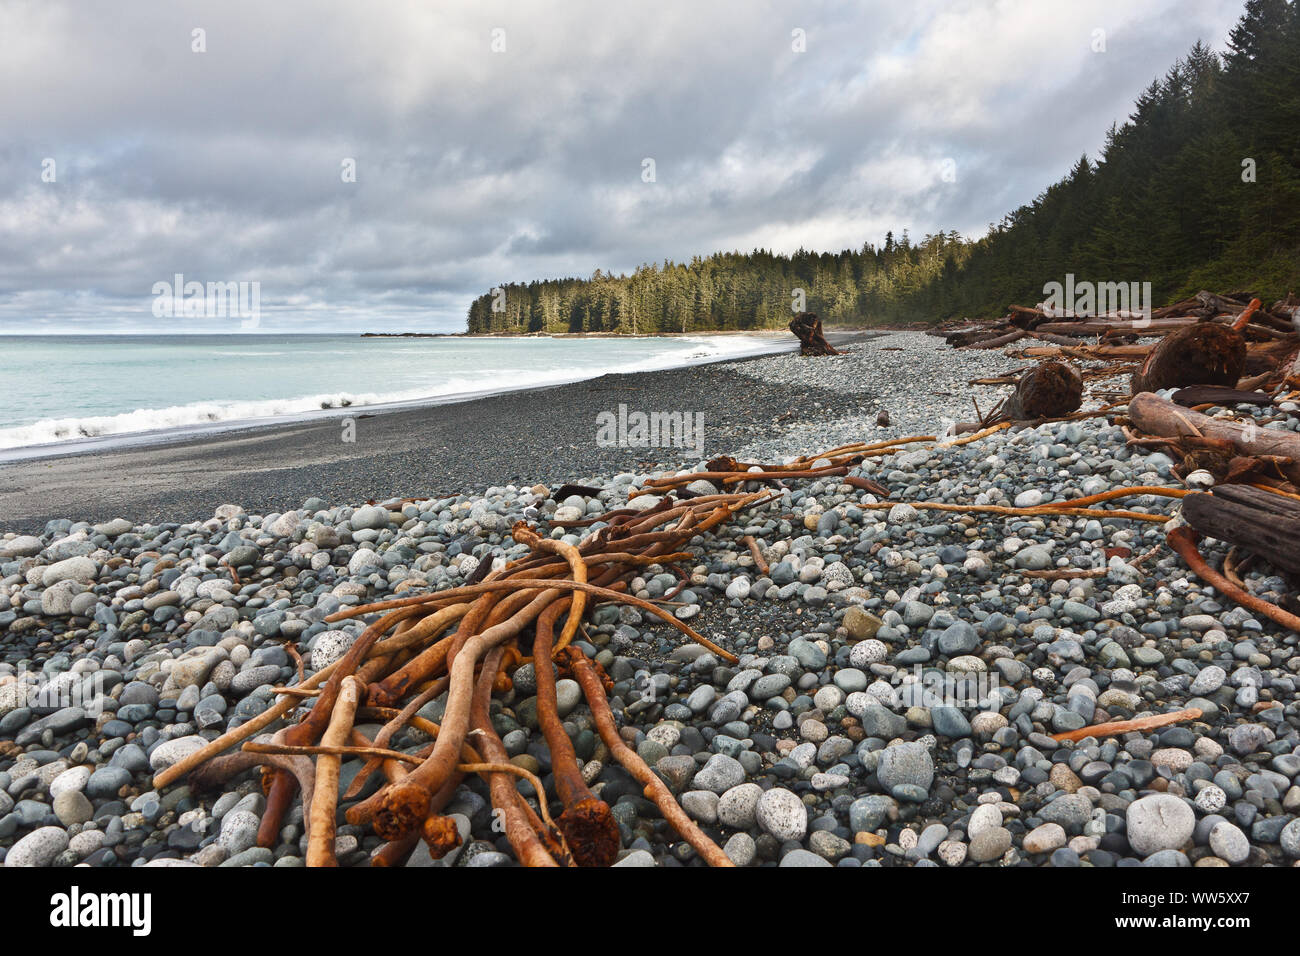 Flotsam on a gravel beach in the Cape Scott Provincial Park, Vancouver Island, British Columbia, Canada Stock Photo